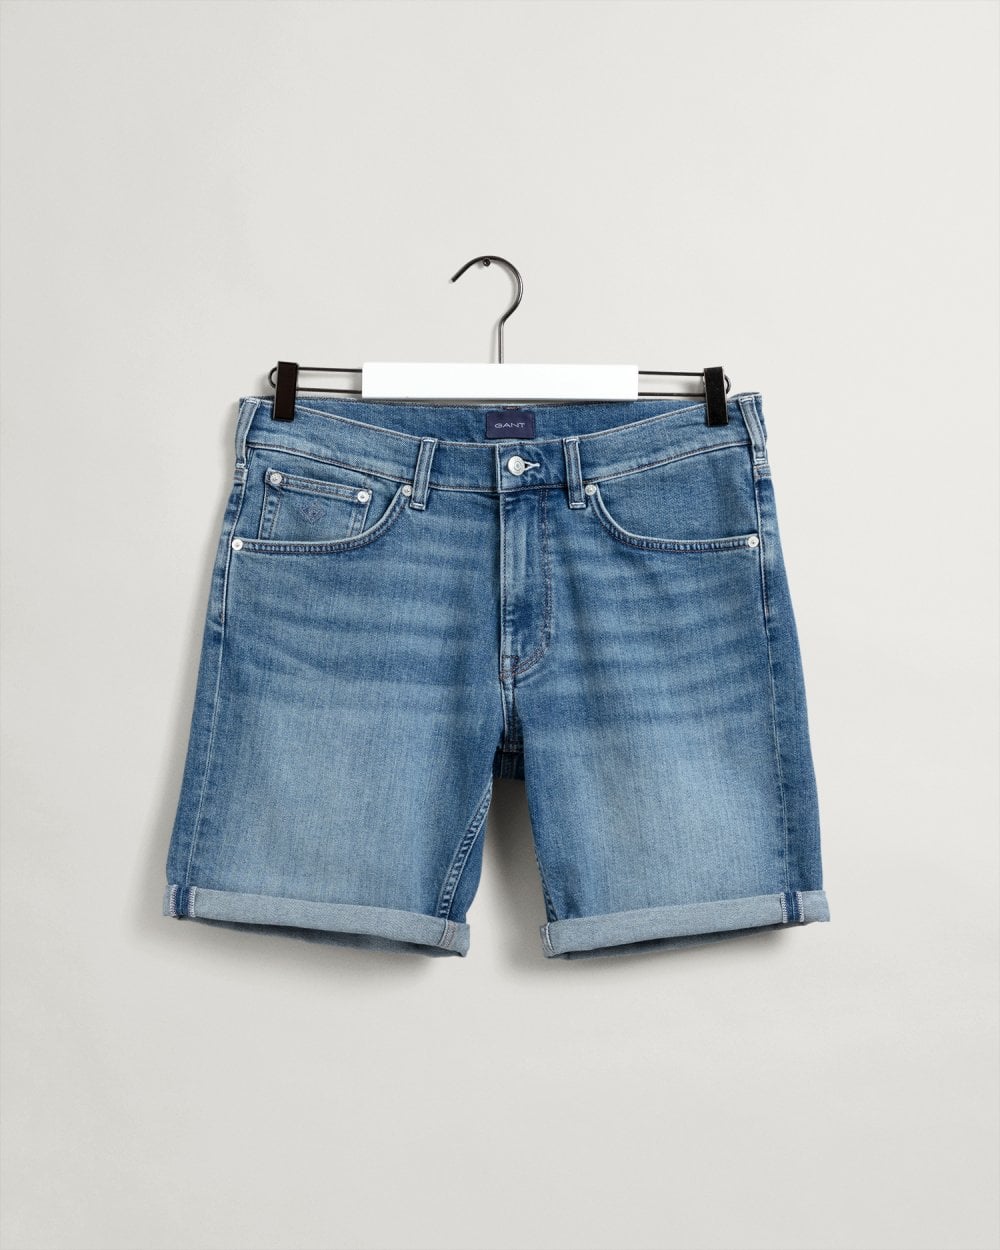 Arley Regular Fit Jean Shorts